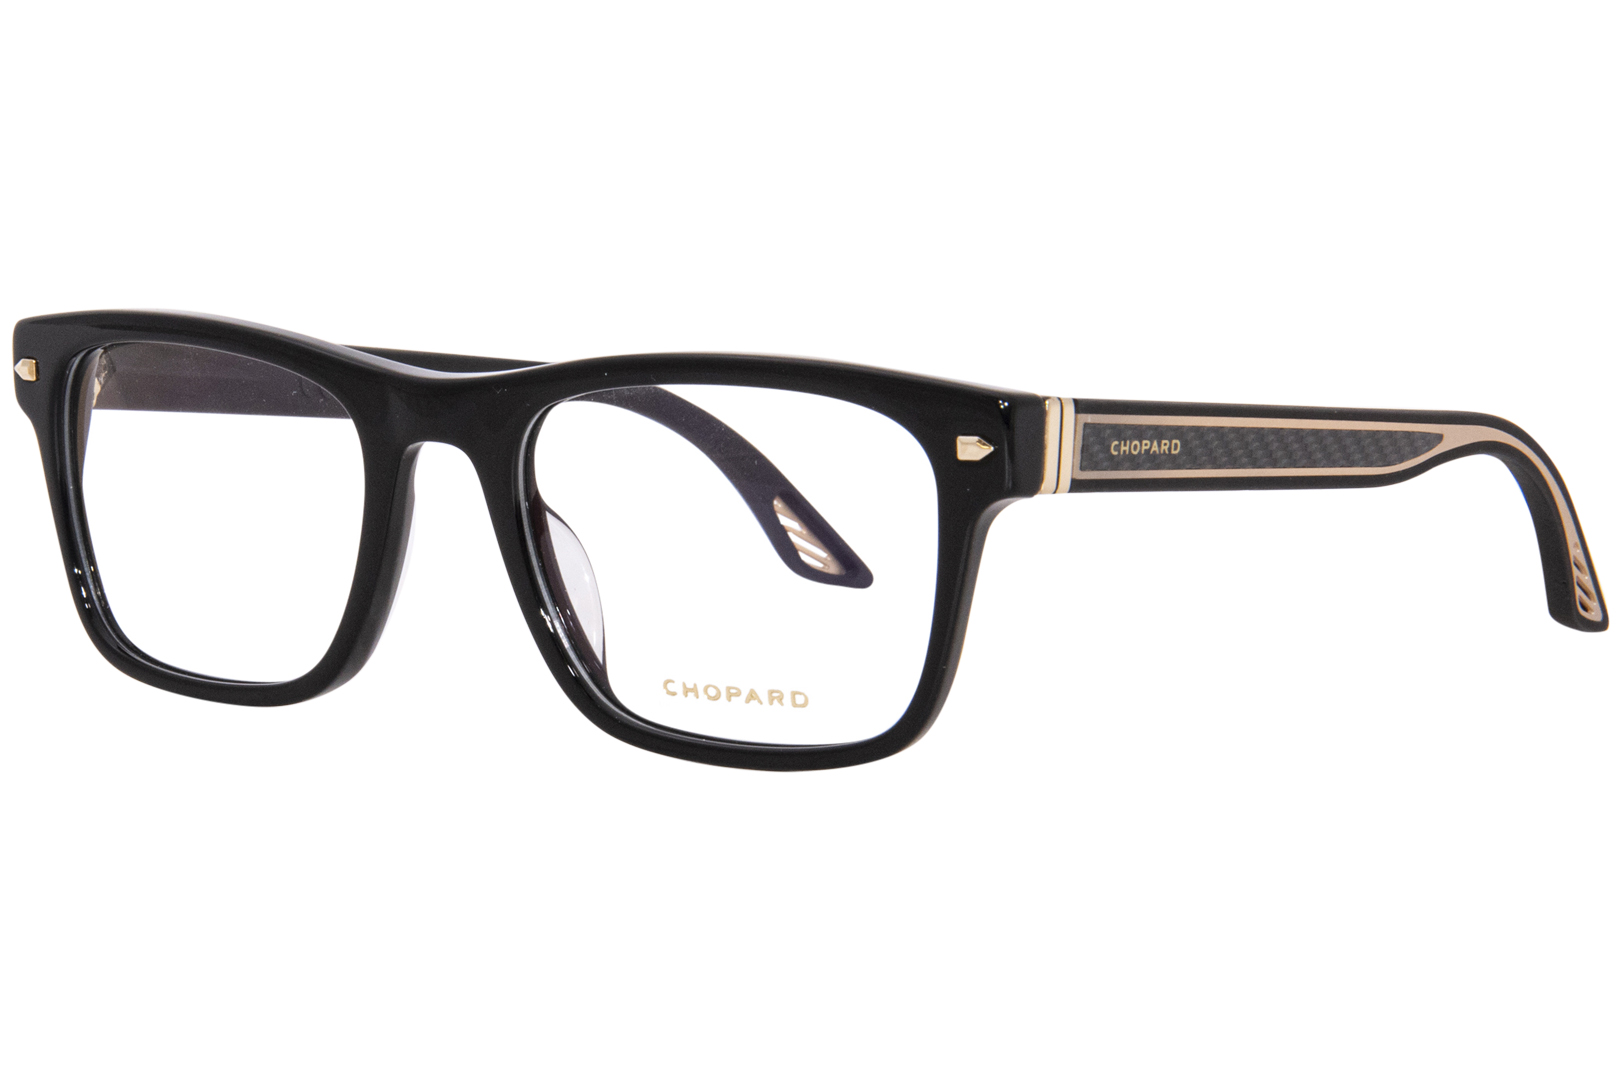 Chopard VCH326 Eyeglasses Men's Full Rim Square Shape | EyeSpecs.com